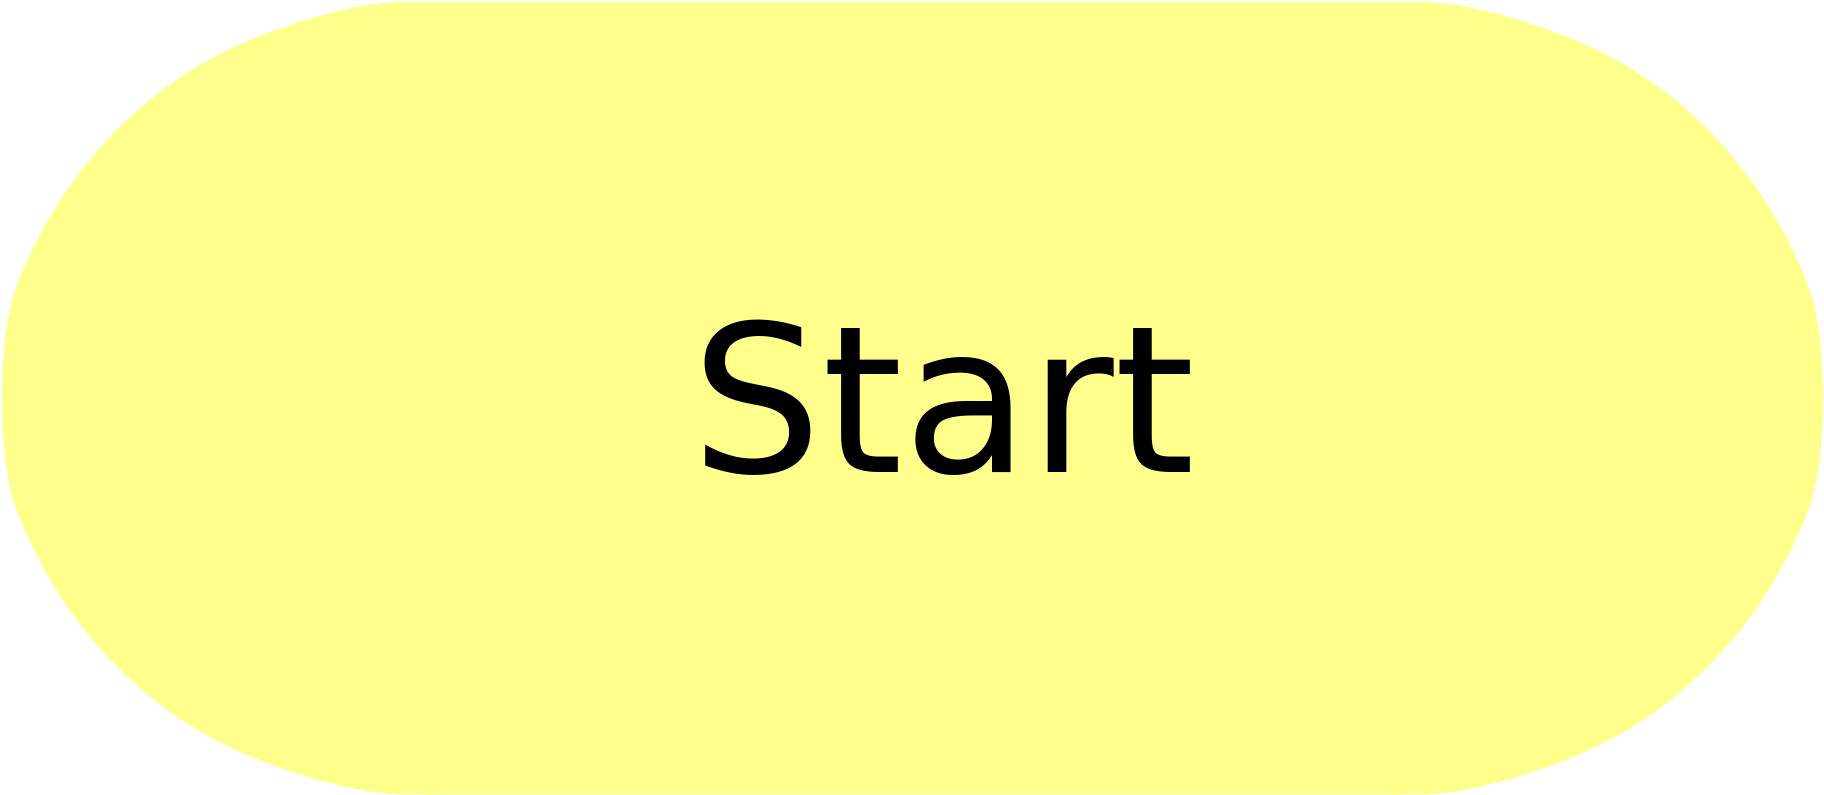 Start 64. Start логотип. Start прозрачный логотип. Start text PNG. Start логотип ПГН.